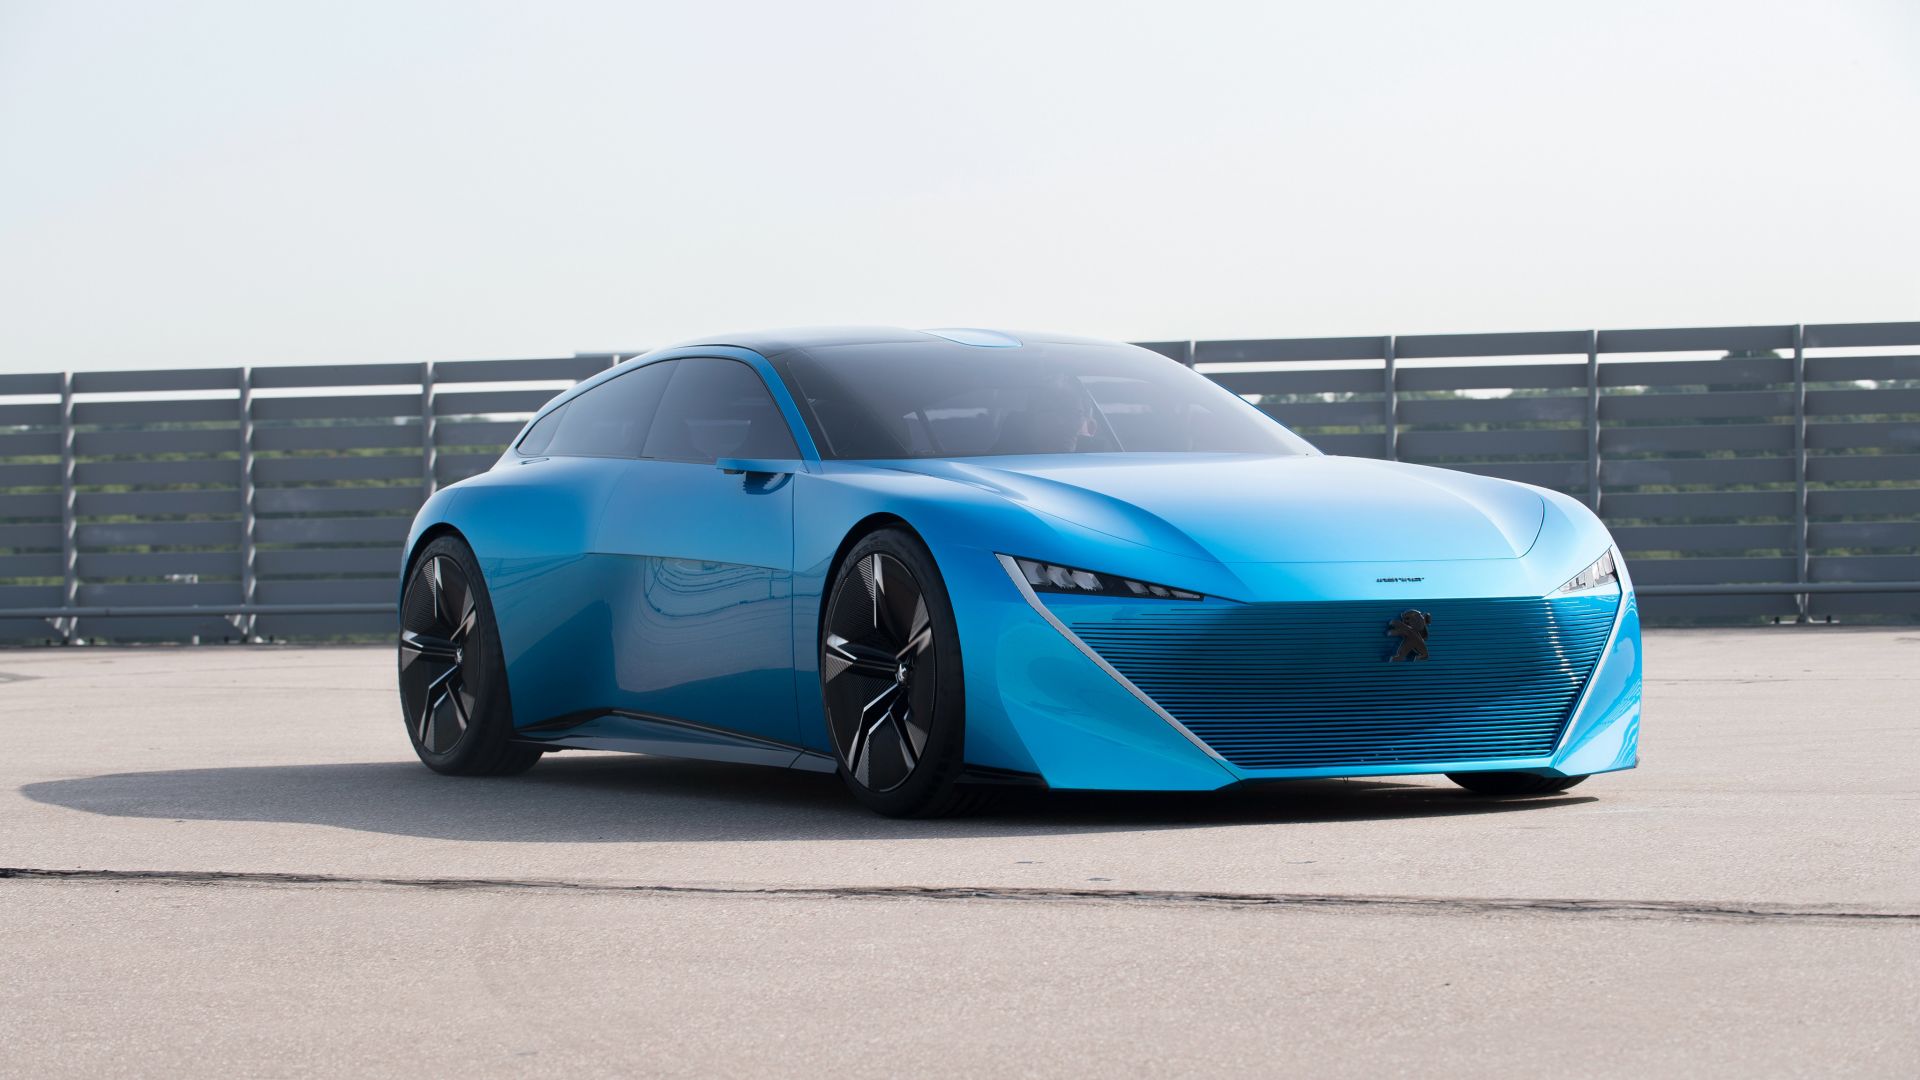 Wallpaper Peugeot instinct, concept car, blue, 4k